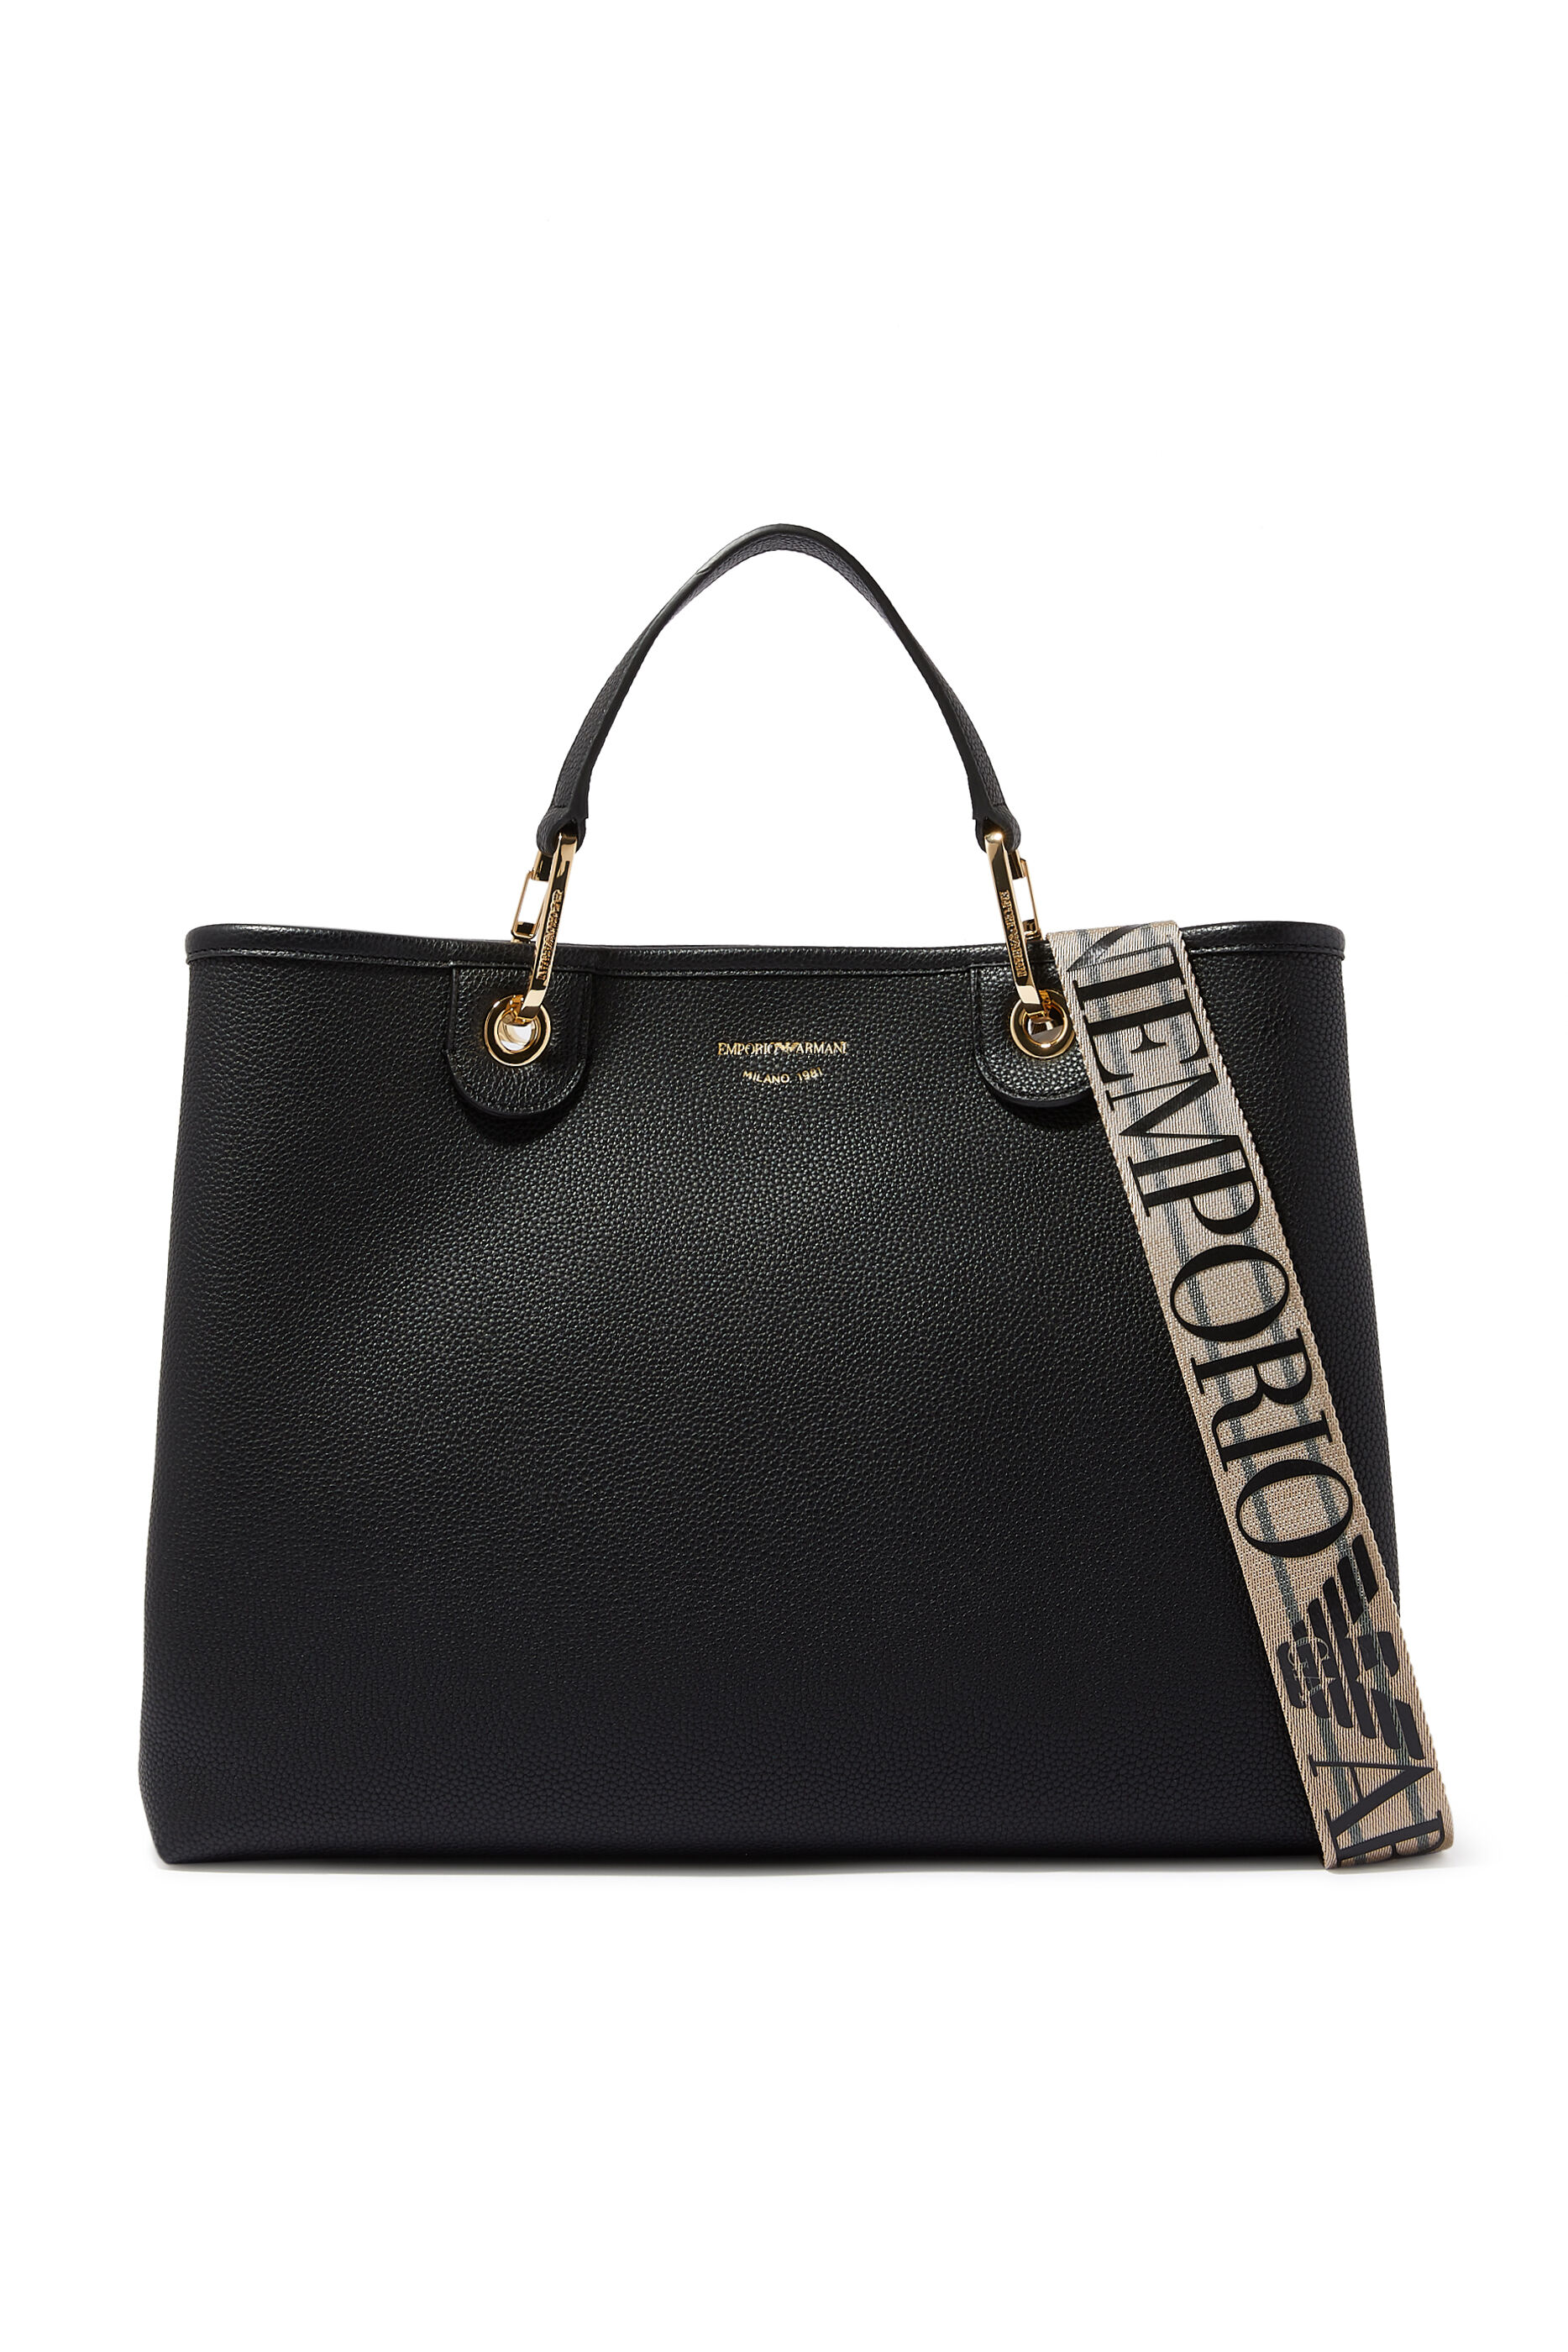 Emporio Armani women's bag with quilted effect Black | Caposerio.com